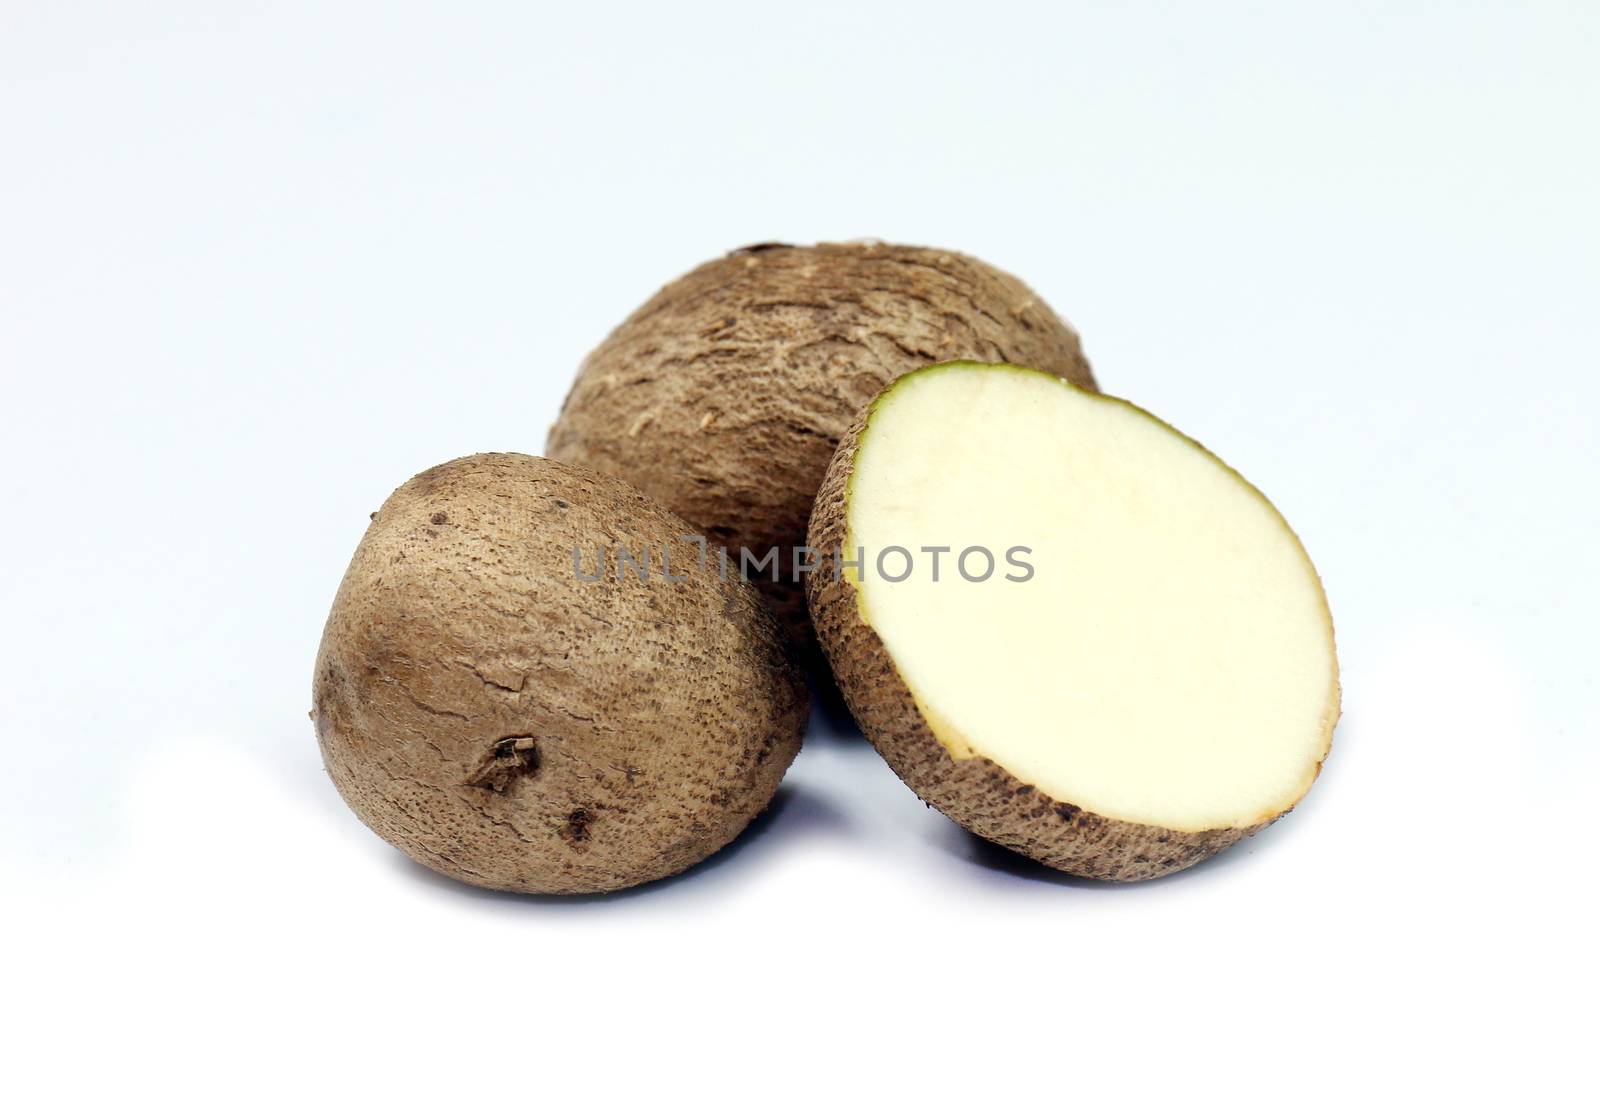 Dioscorea, Mun-Neb (Thai word), Fresh Dioscorea tuck, Dioscorea slats root isolated on white background, Rubeola fotografie by cgdeaw